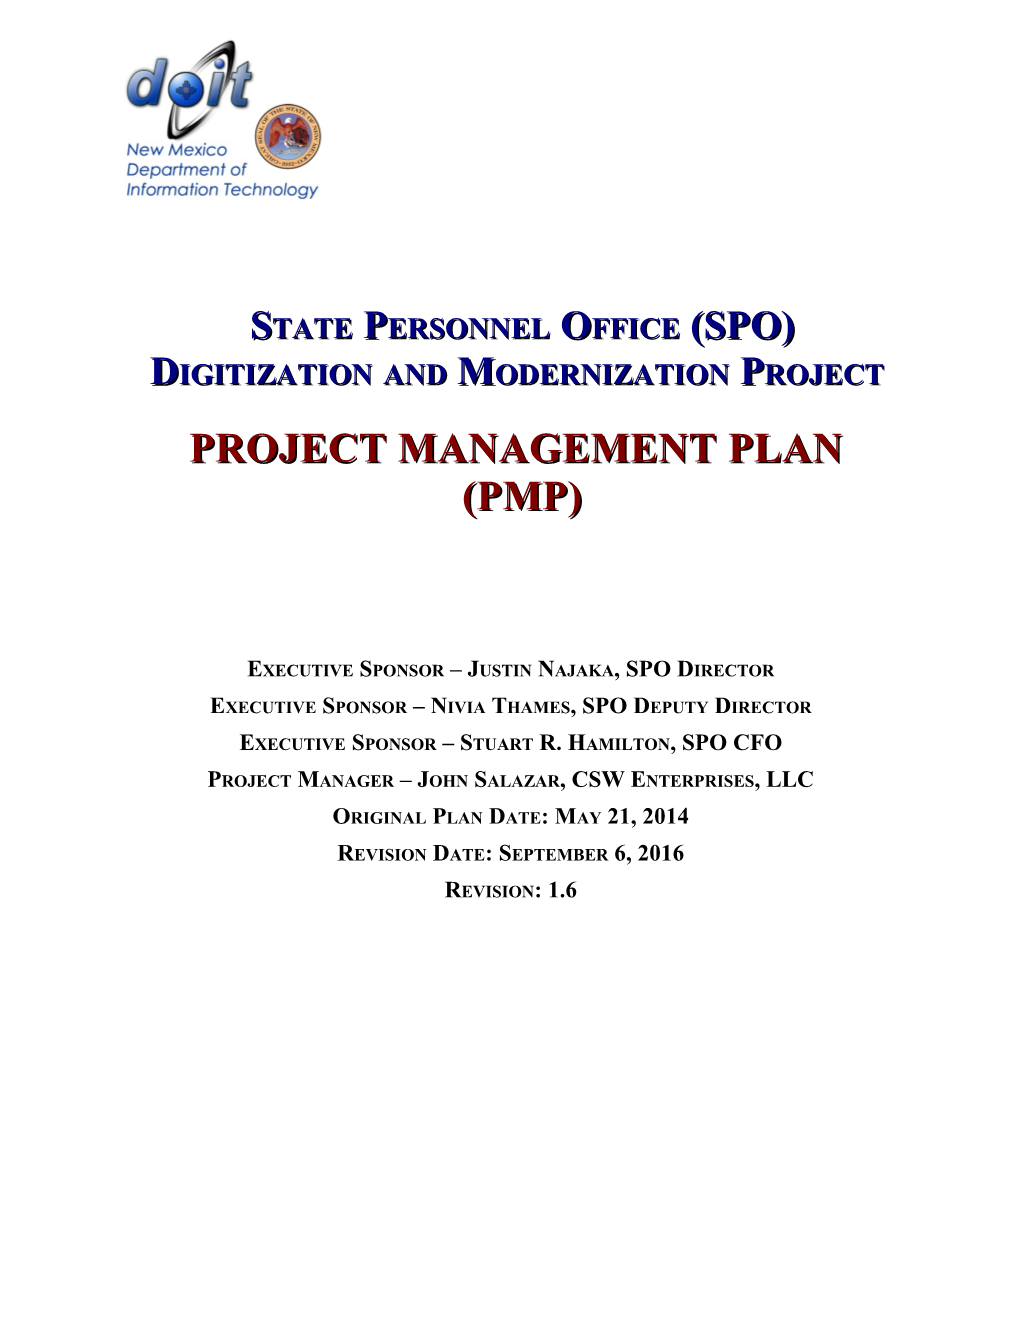 State Personnel Office (SPO) Digitization and Modernization Project